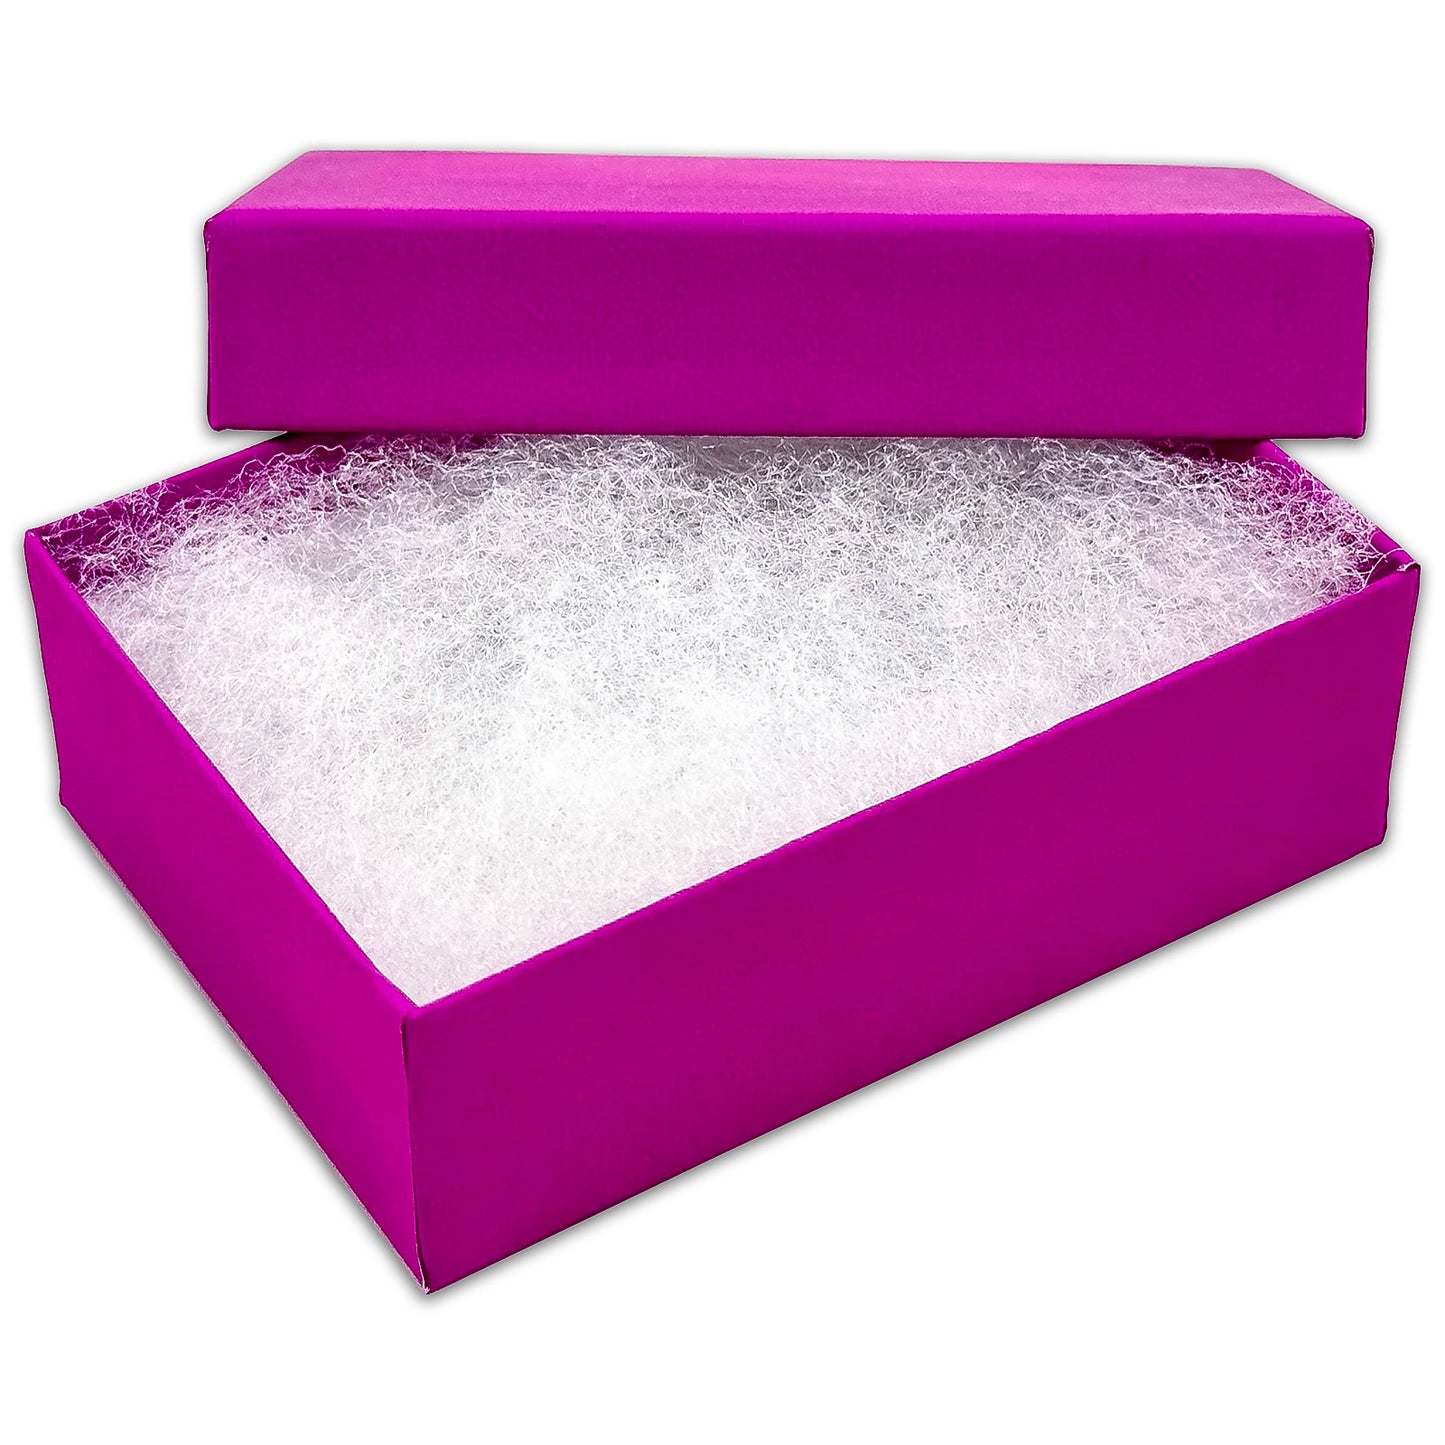 2 5/8" x 1 5/8" x 1" Neon Purple Cotton Filled Paper Box